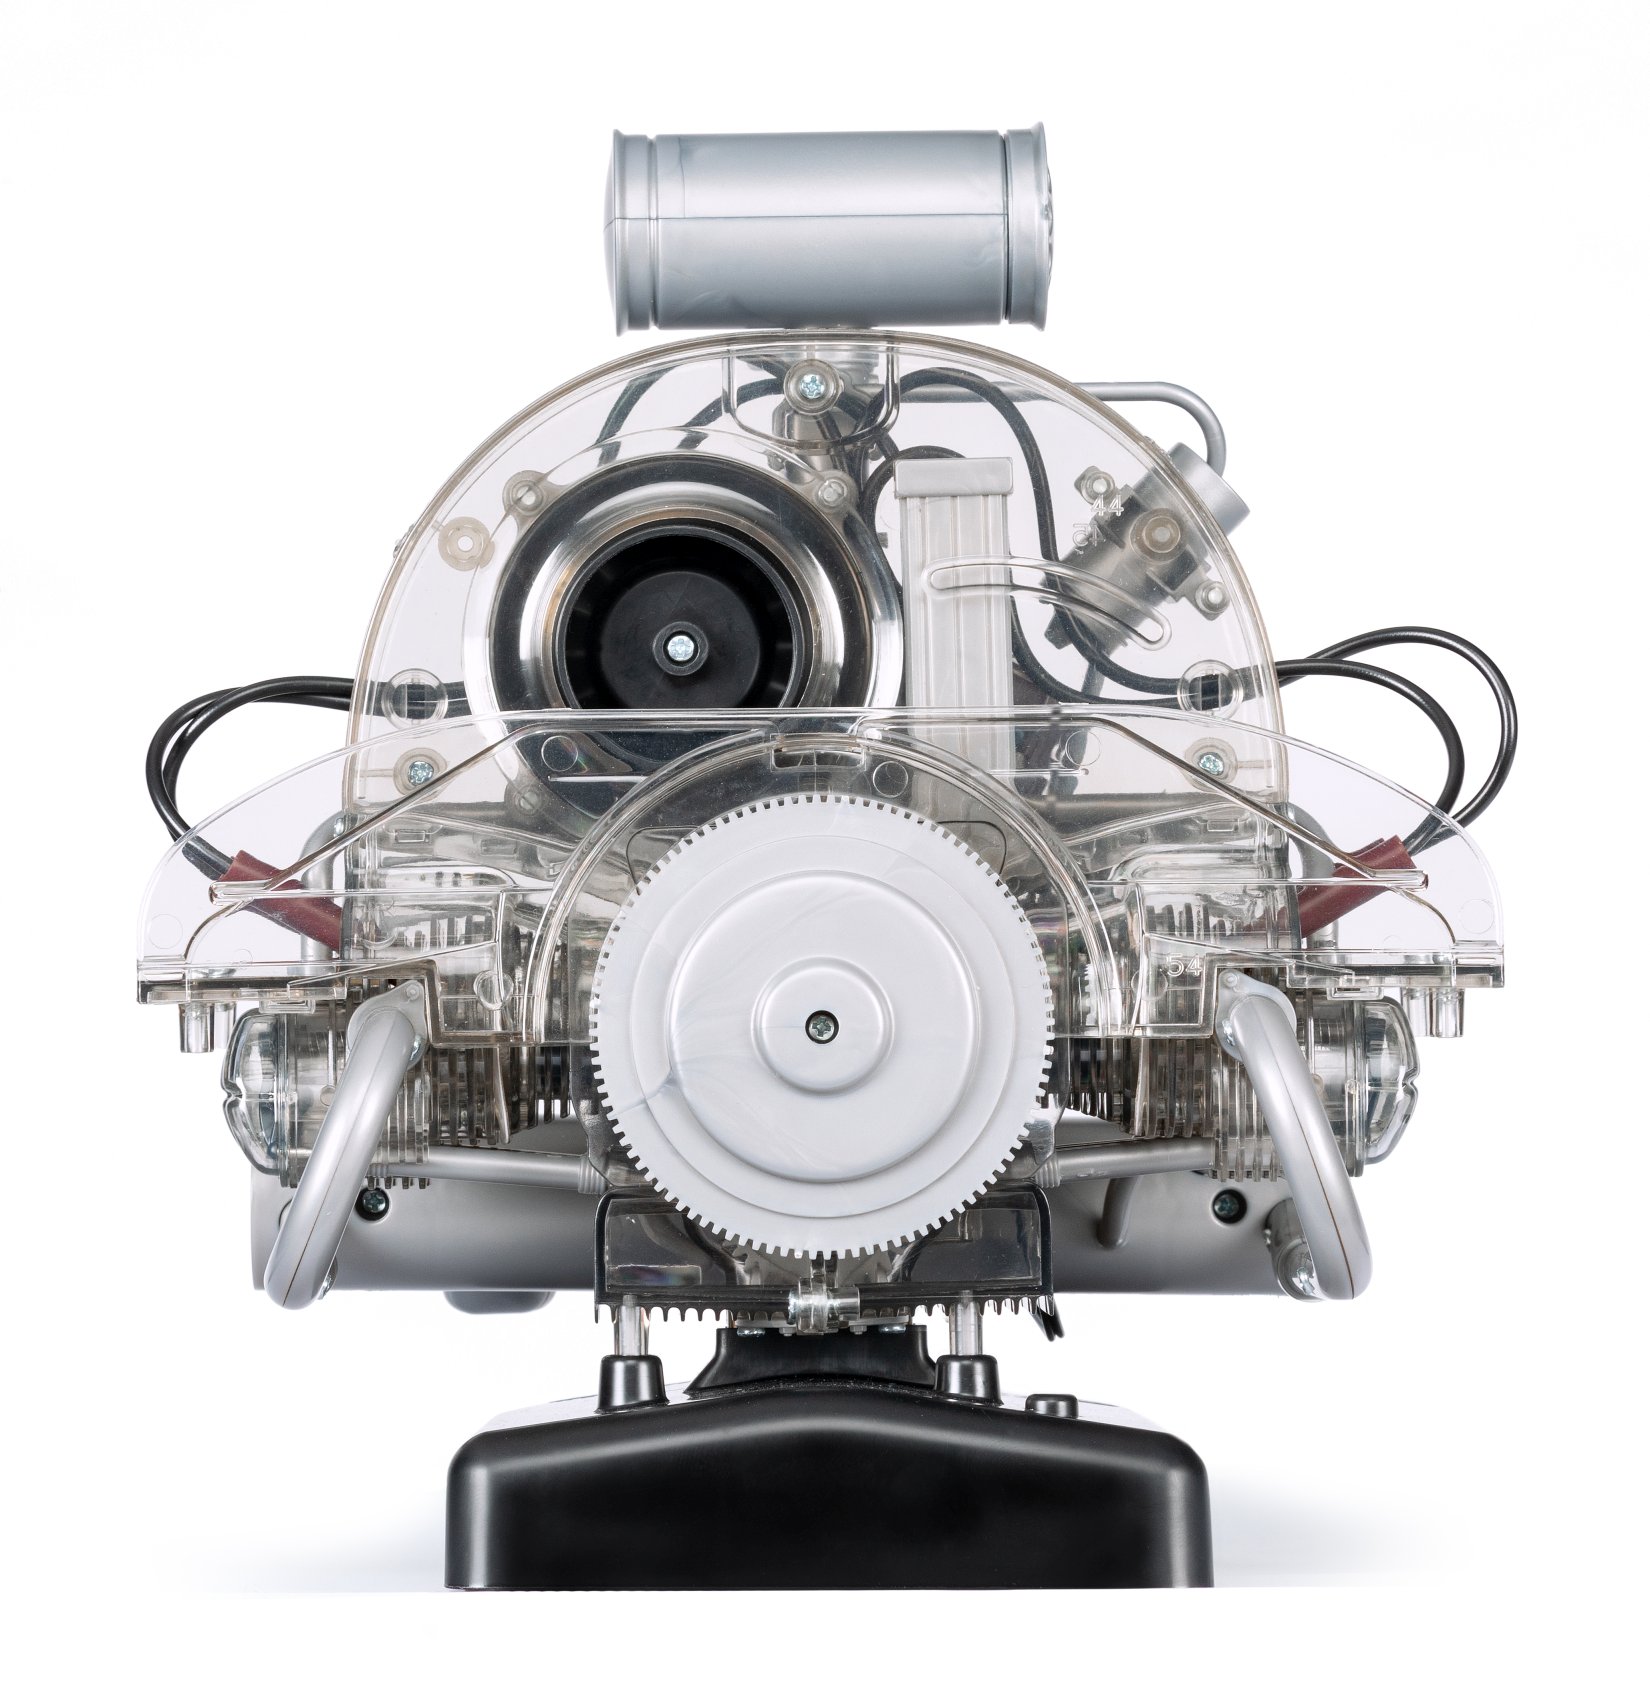 Bouwset 4-Cilinder motor - Bulli T1